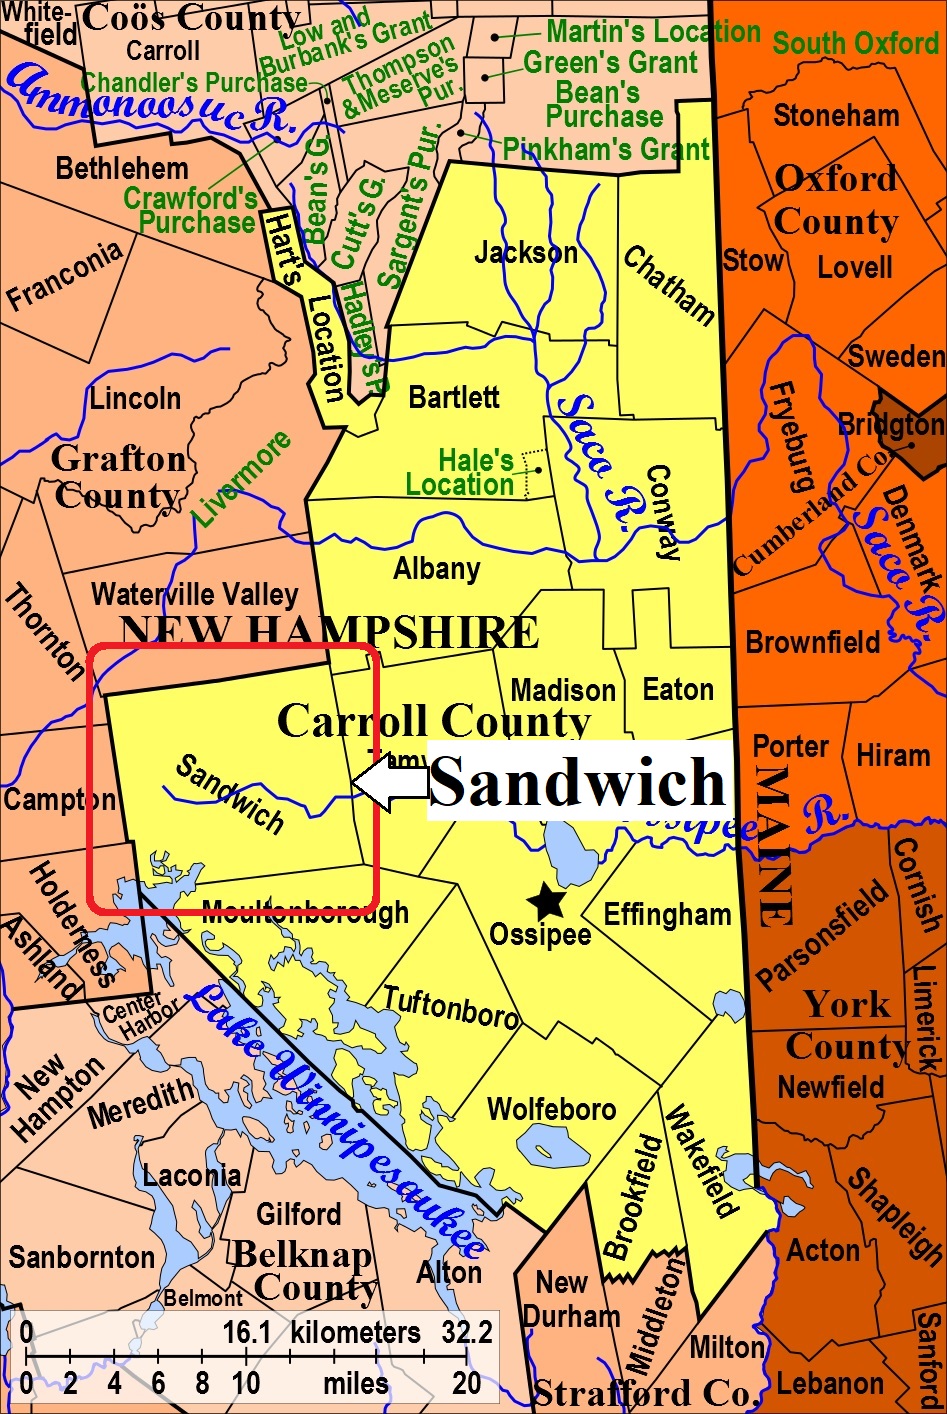 Map showing Sandwich